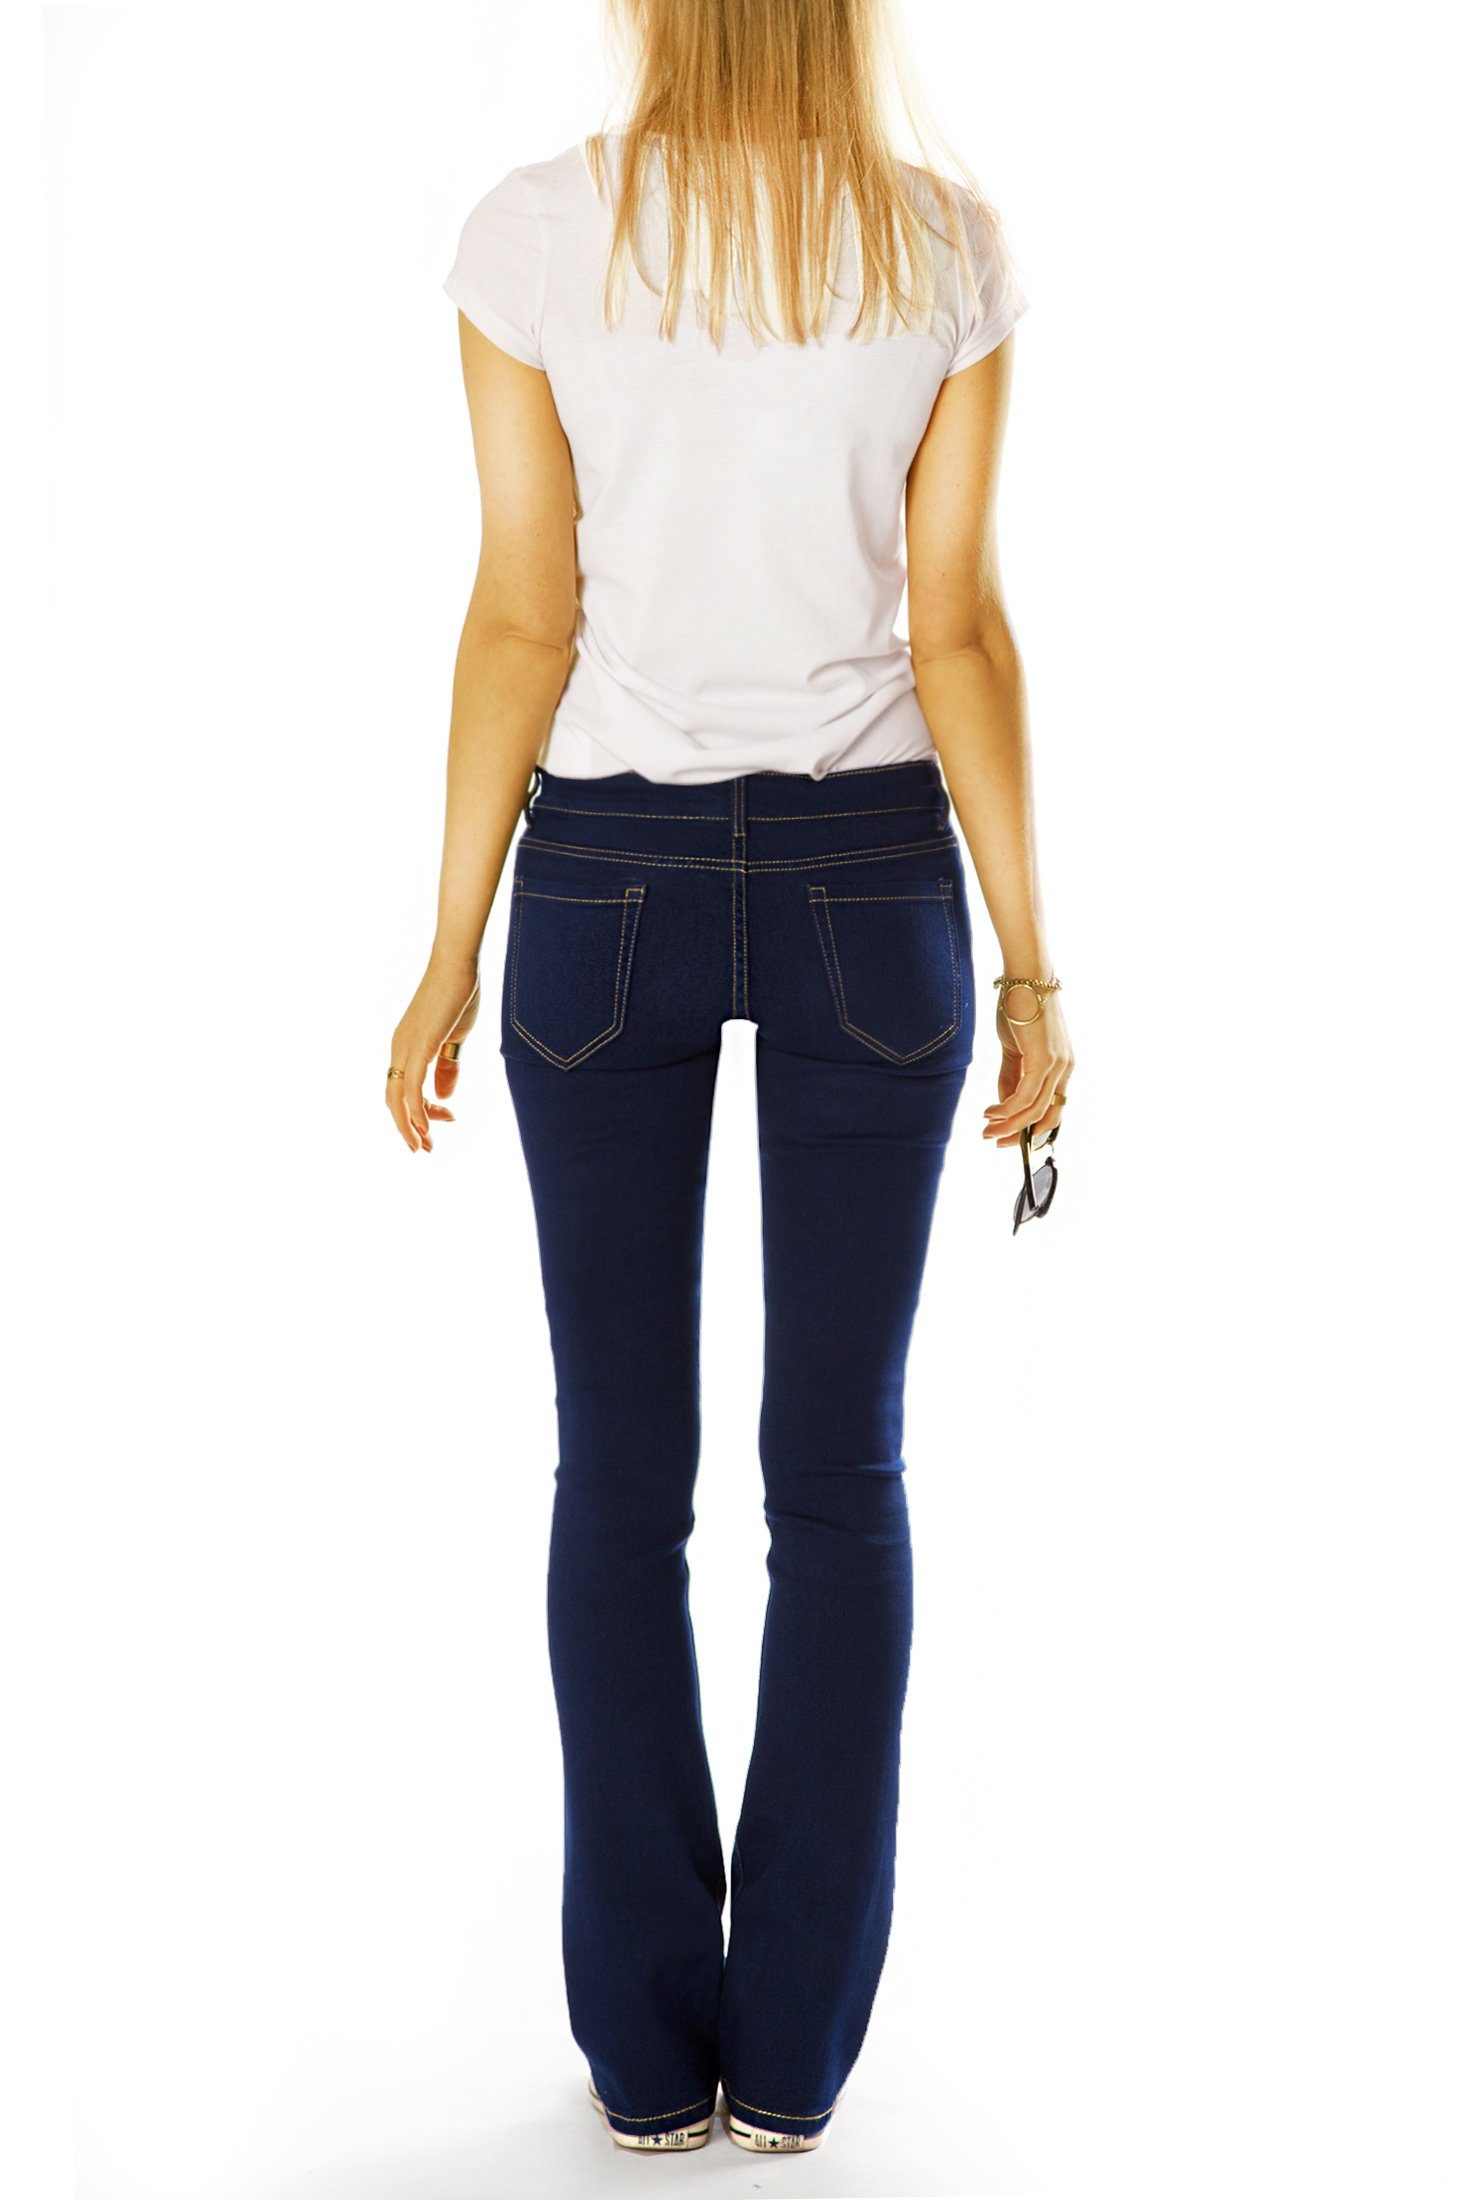 be styled Bootcut-Jeans Hüftjeans Bootcut Jeanshose -j18g Stretch-Anteil, Damen schwarz - 5-Pocket-Style Stretchjeans mit